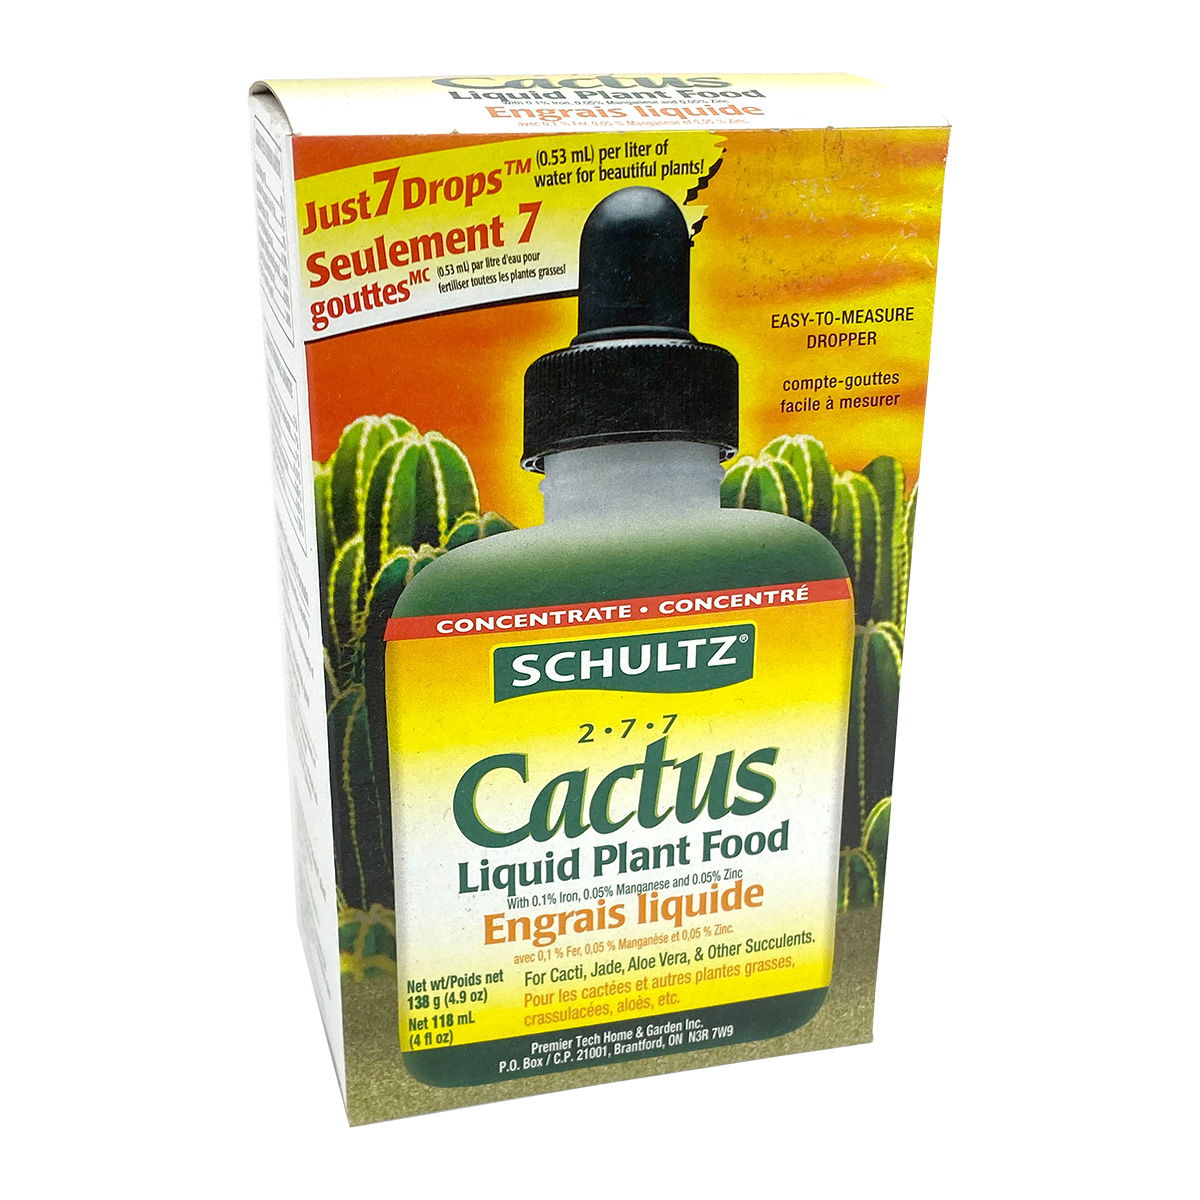 Schultz_Cactus_LiquidPlantFood.jpg